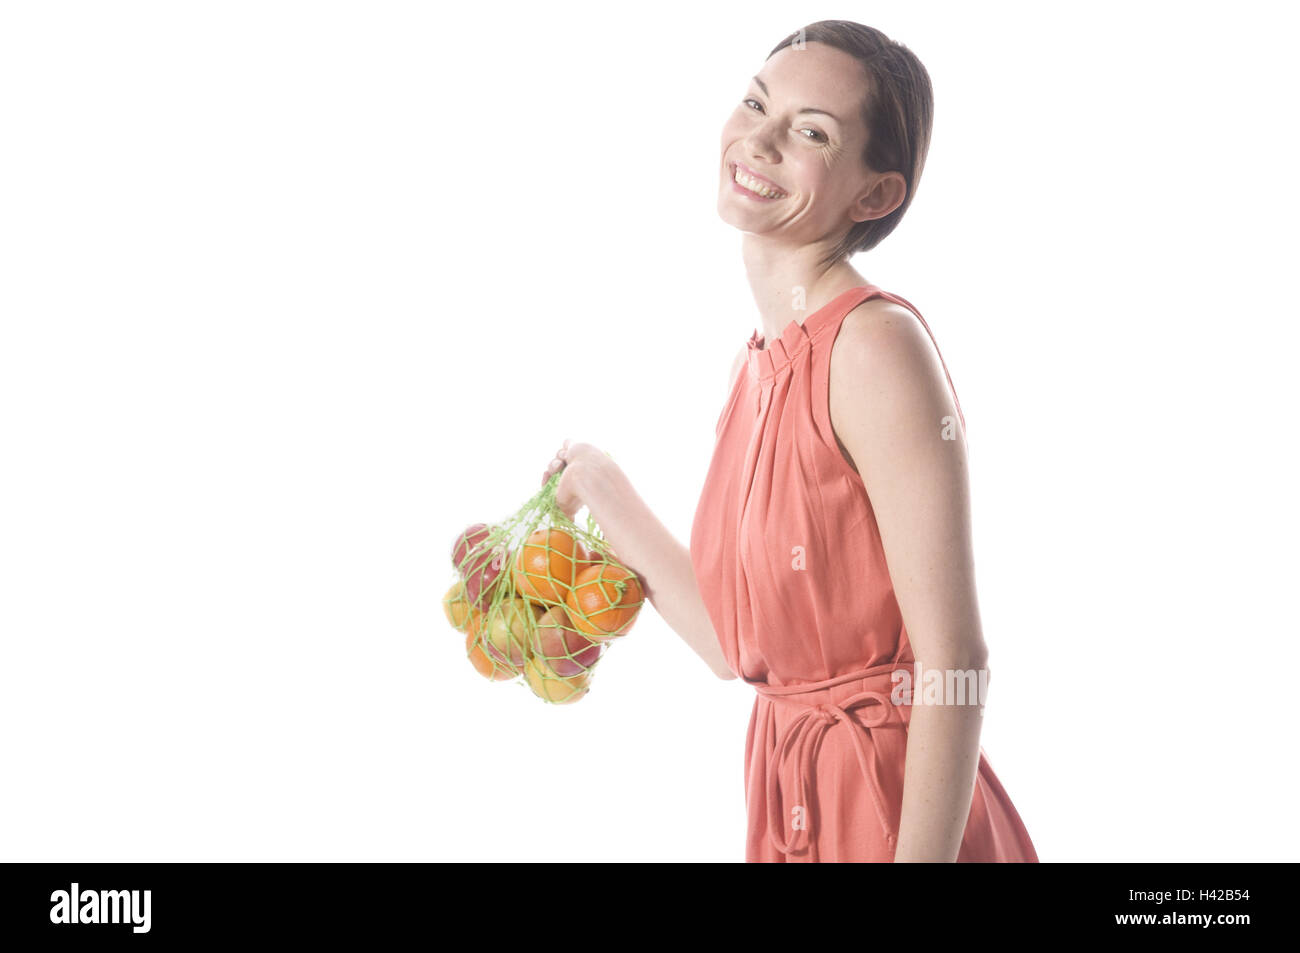 Woman, string bag, fruit, smile, happily, Stock Photo